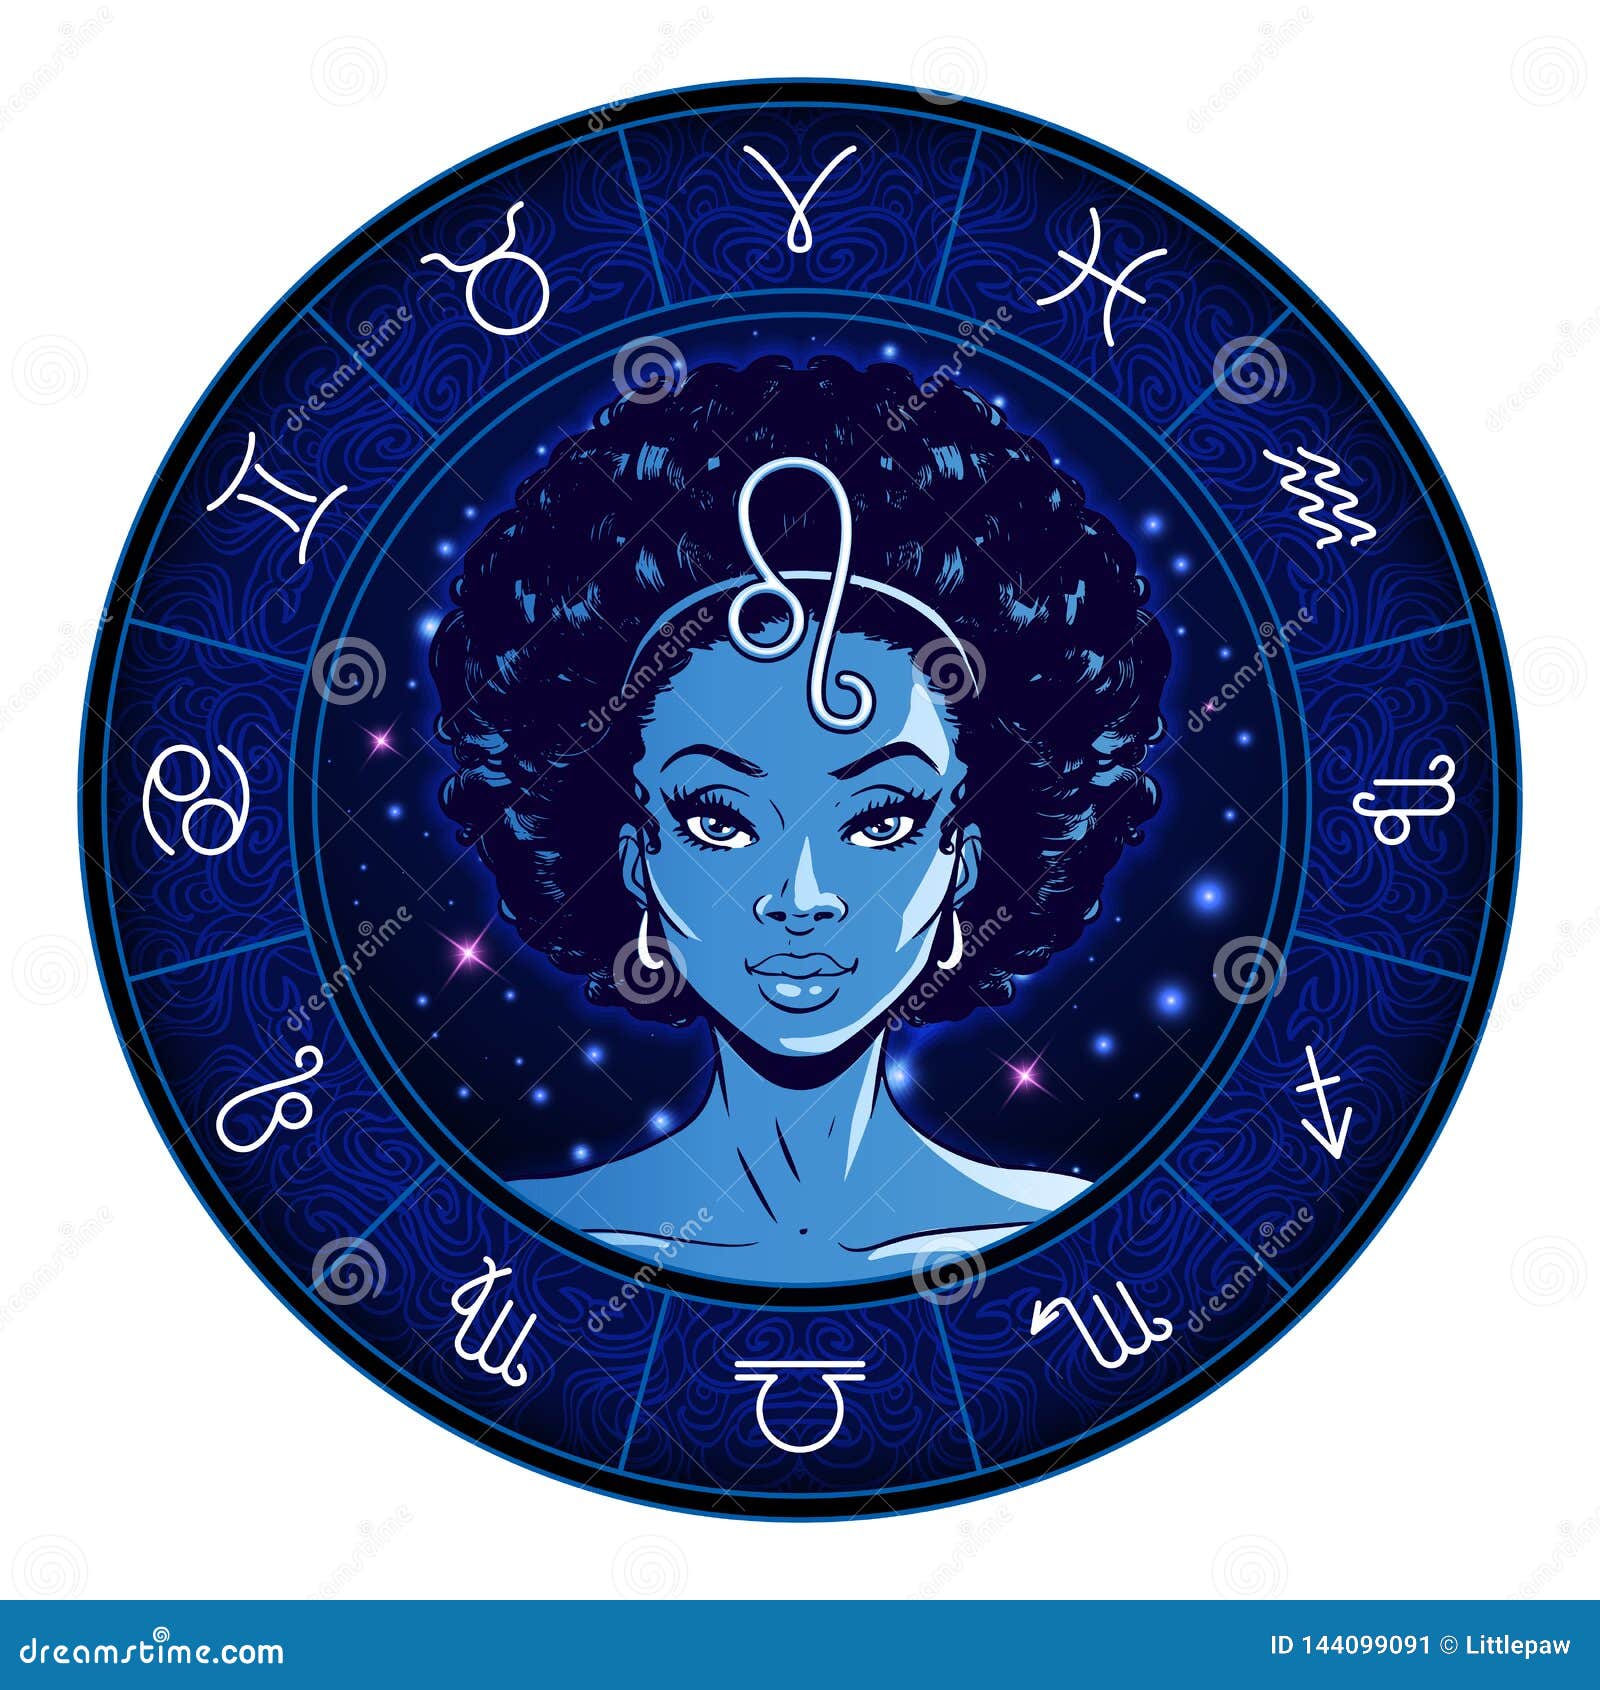 leo zodiac sign artwork, beautiful girl face, horoscope , star sign,  